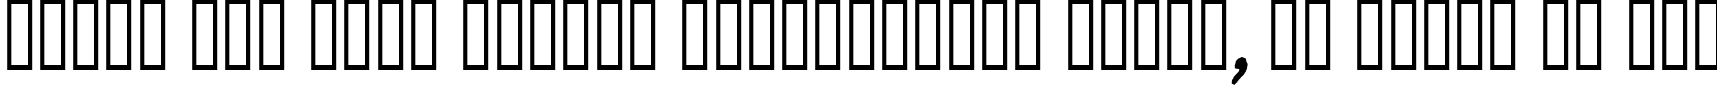 Пример написания шрифтом Dominican  Italic текста на русском